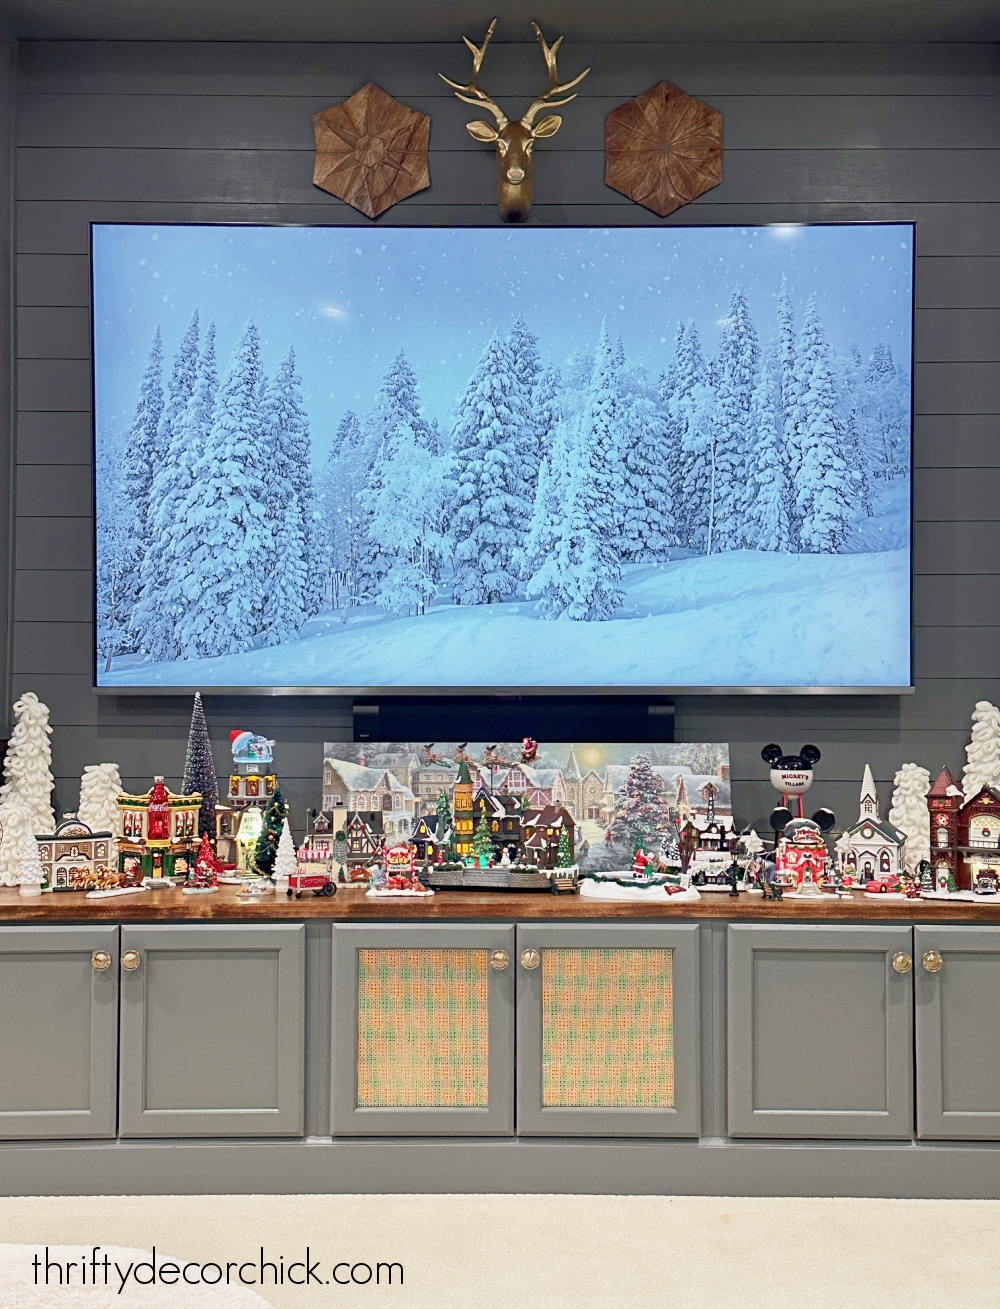 Christmas village display under TV